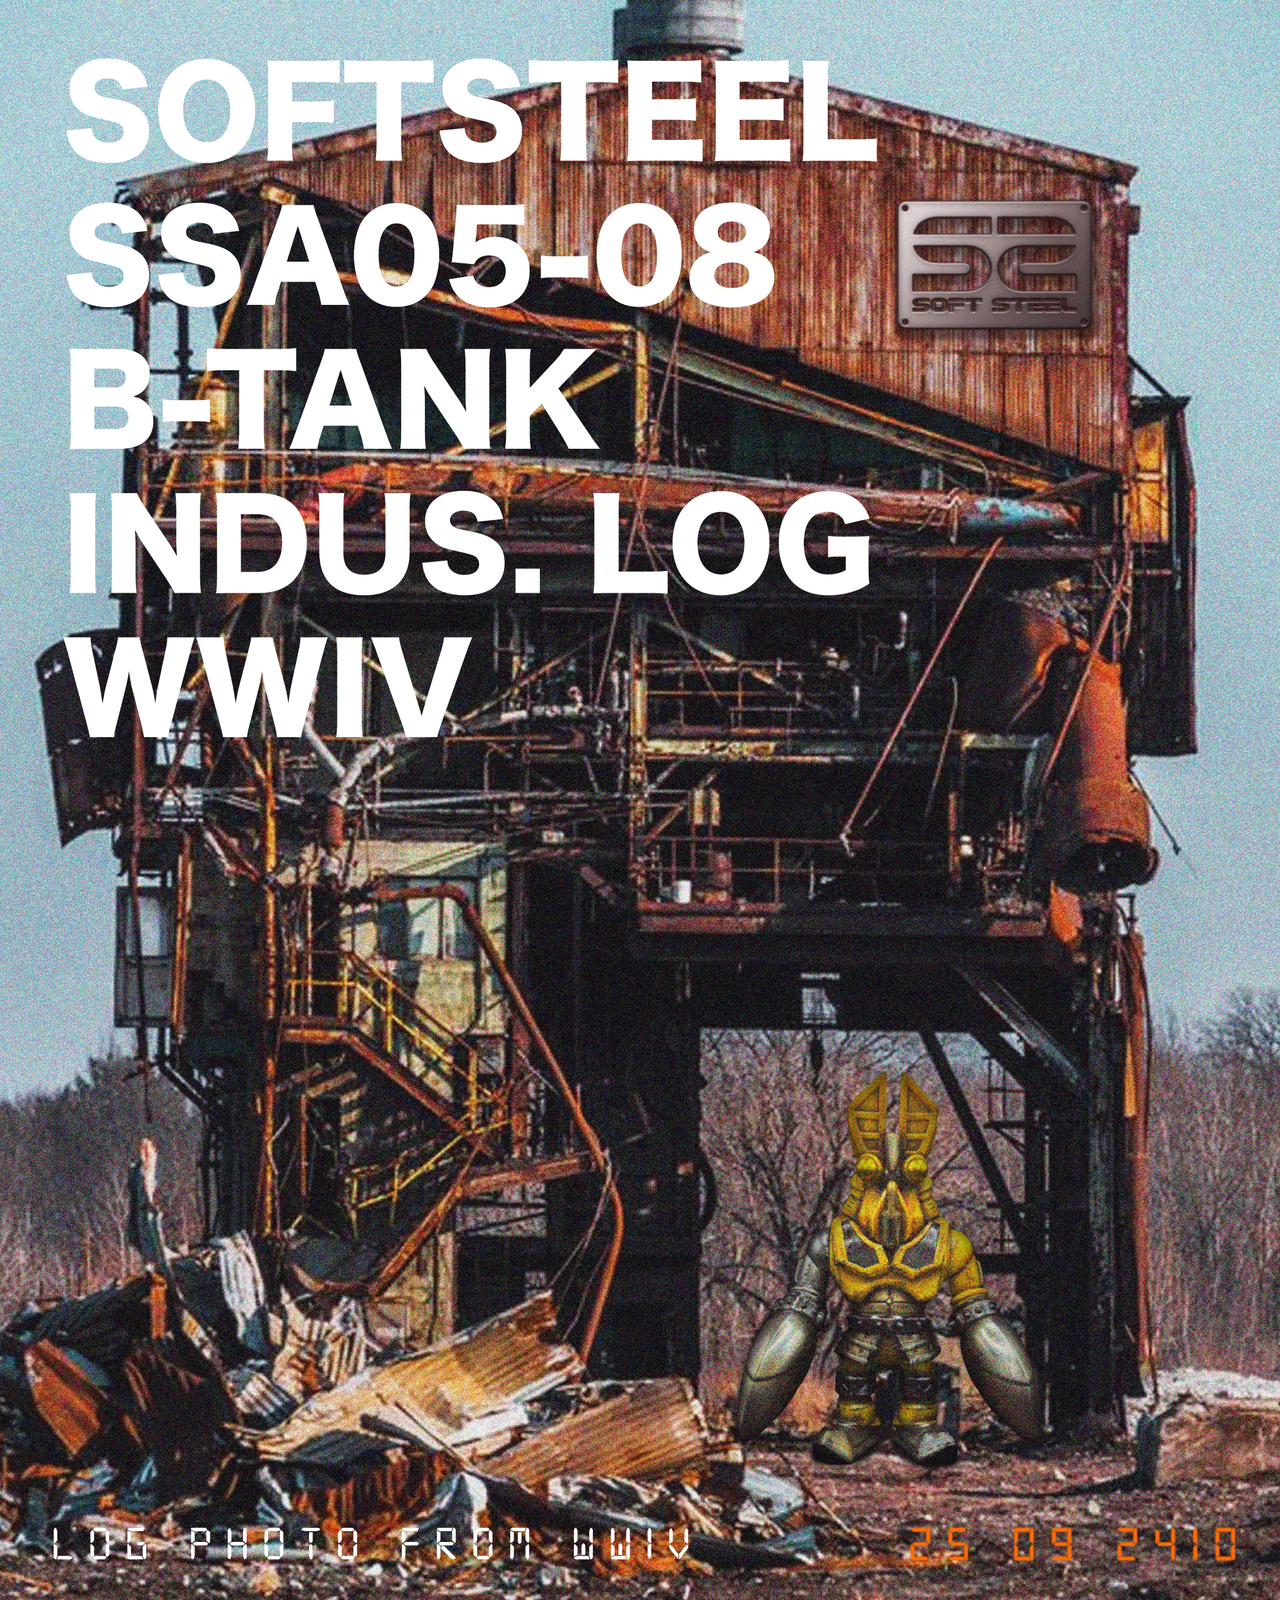 B tank Indus log WWIV by Soft Steel